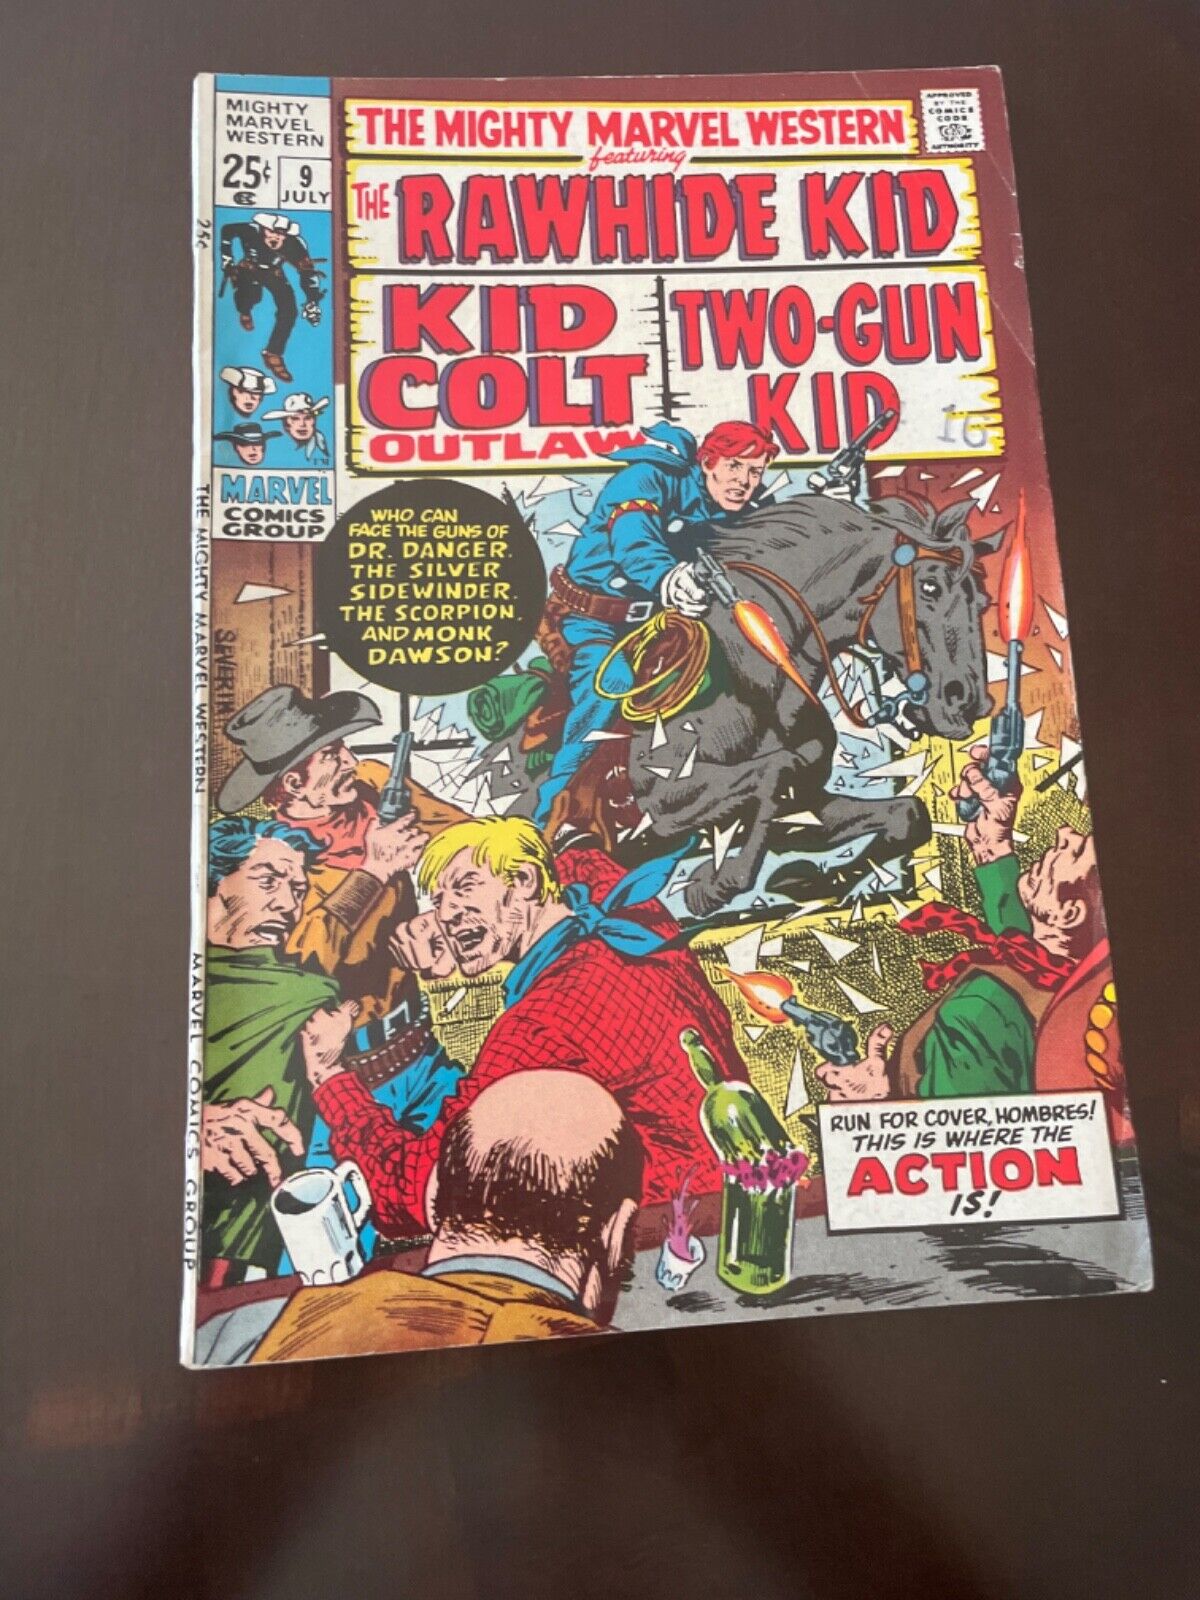 The Mighty Marvel Western #9 Vol 1 (Marvel, 1970) High Grade Rawhide Kid